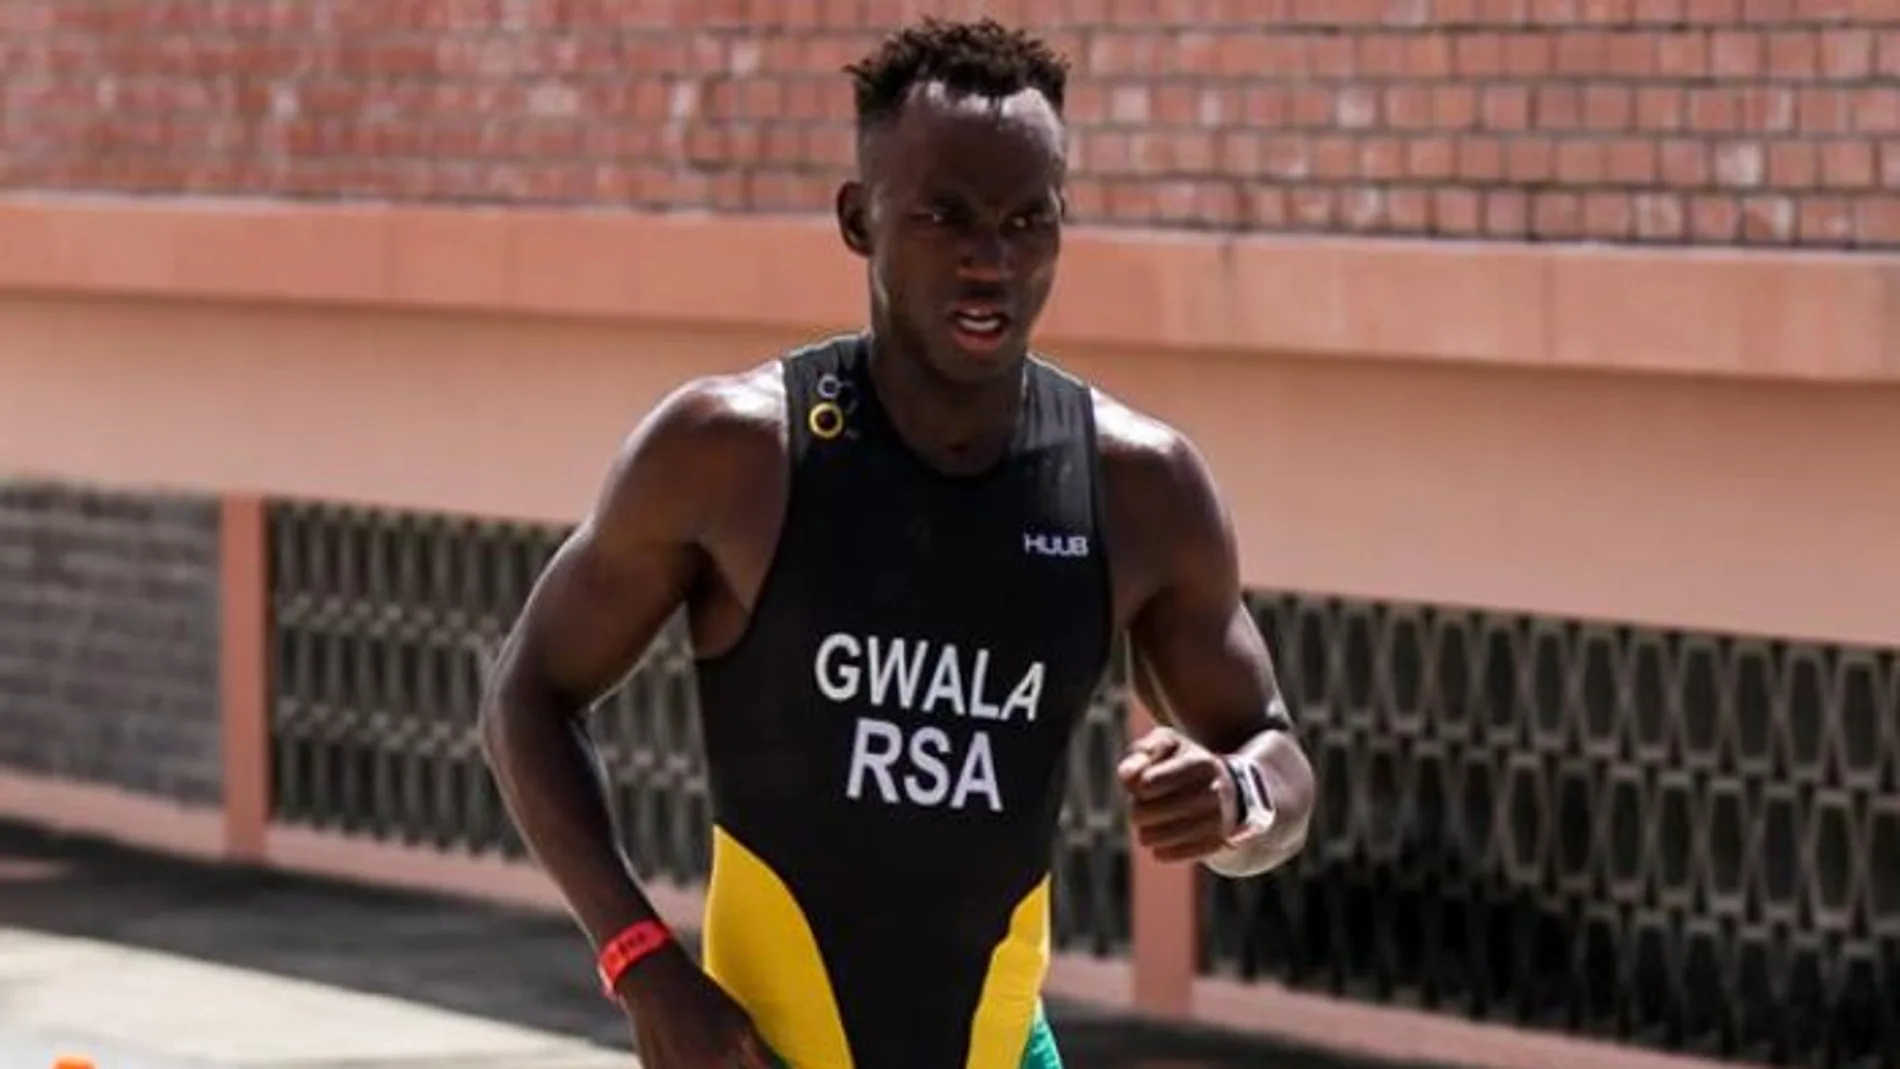 El triatleta Mhlengi Gwala